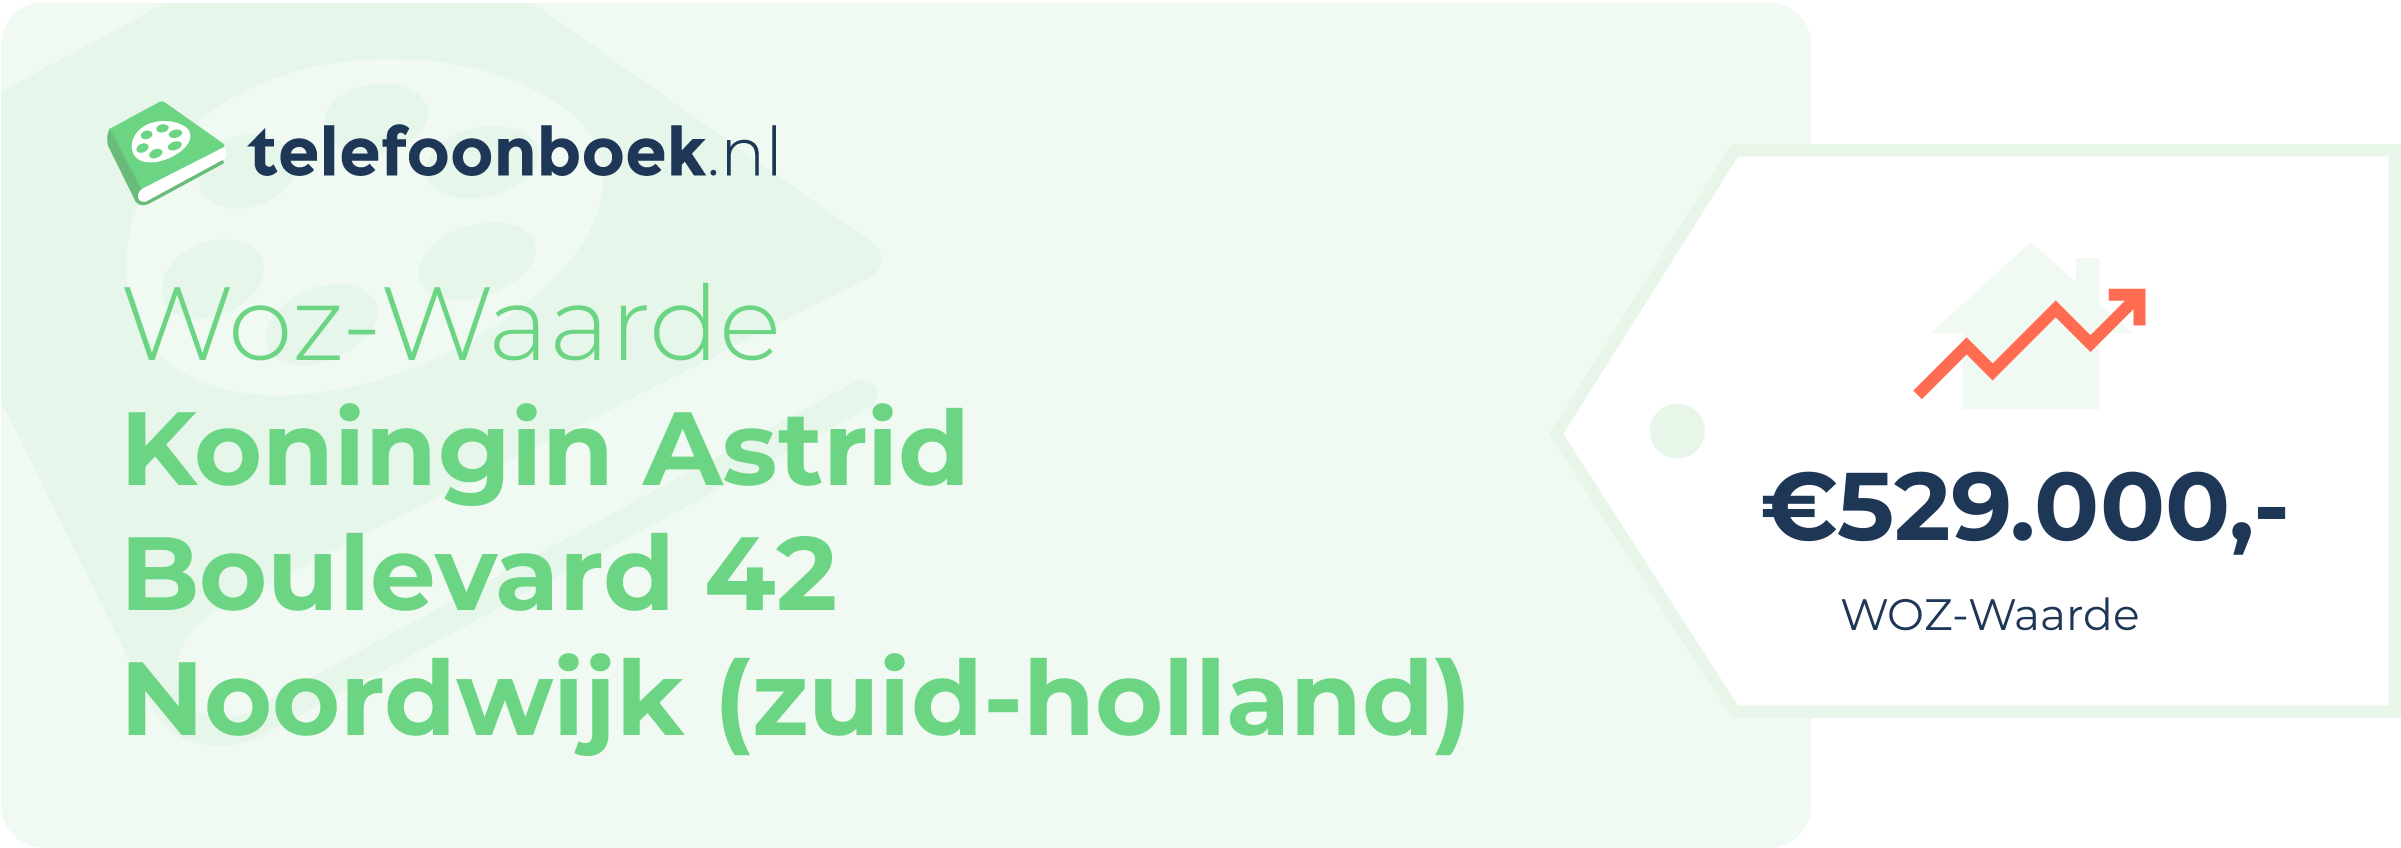 WOZ-waarde Koningin Astrid Boulevard 42 Noordwijk (Zuid-Holland)